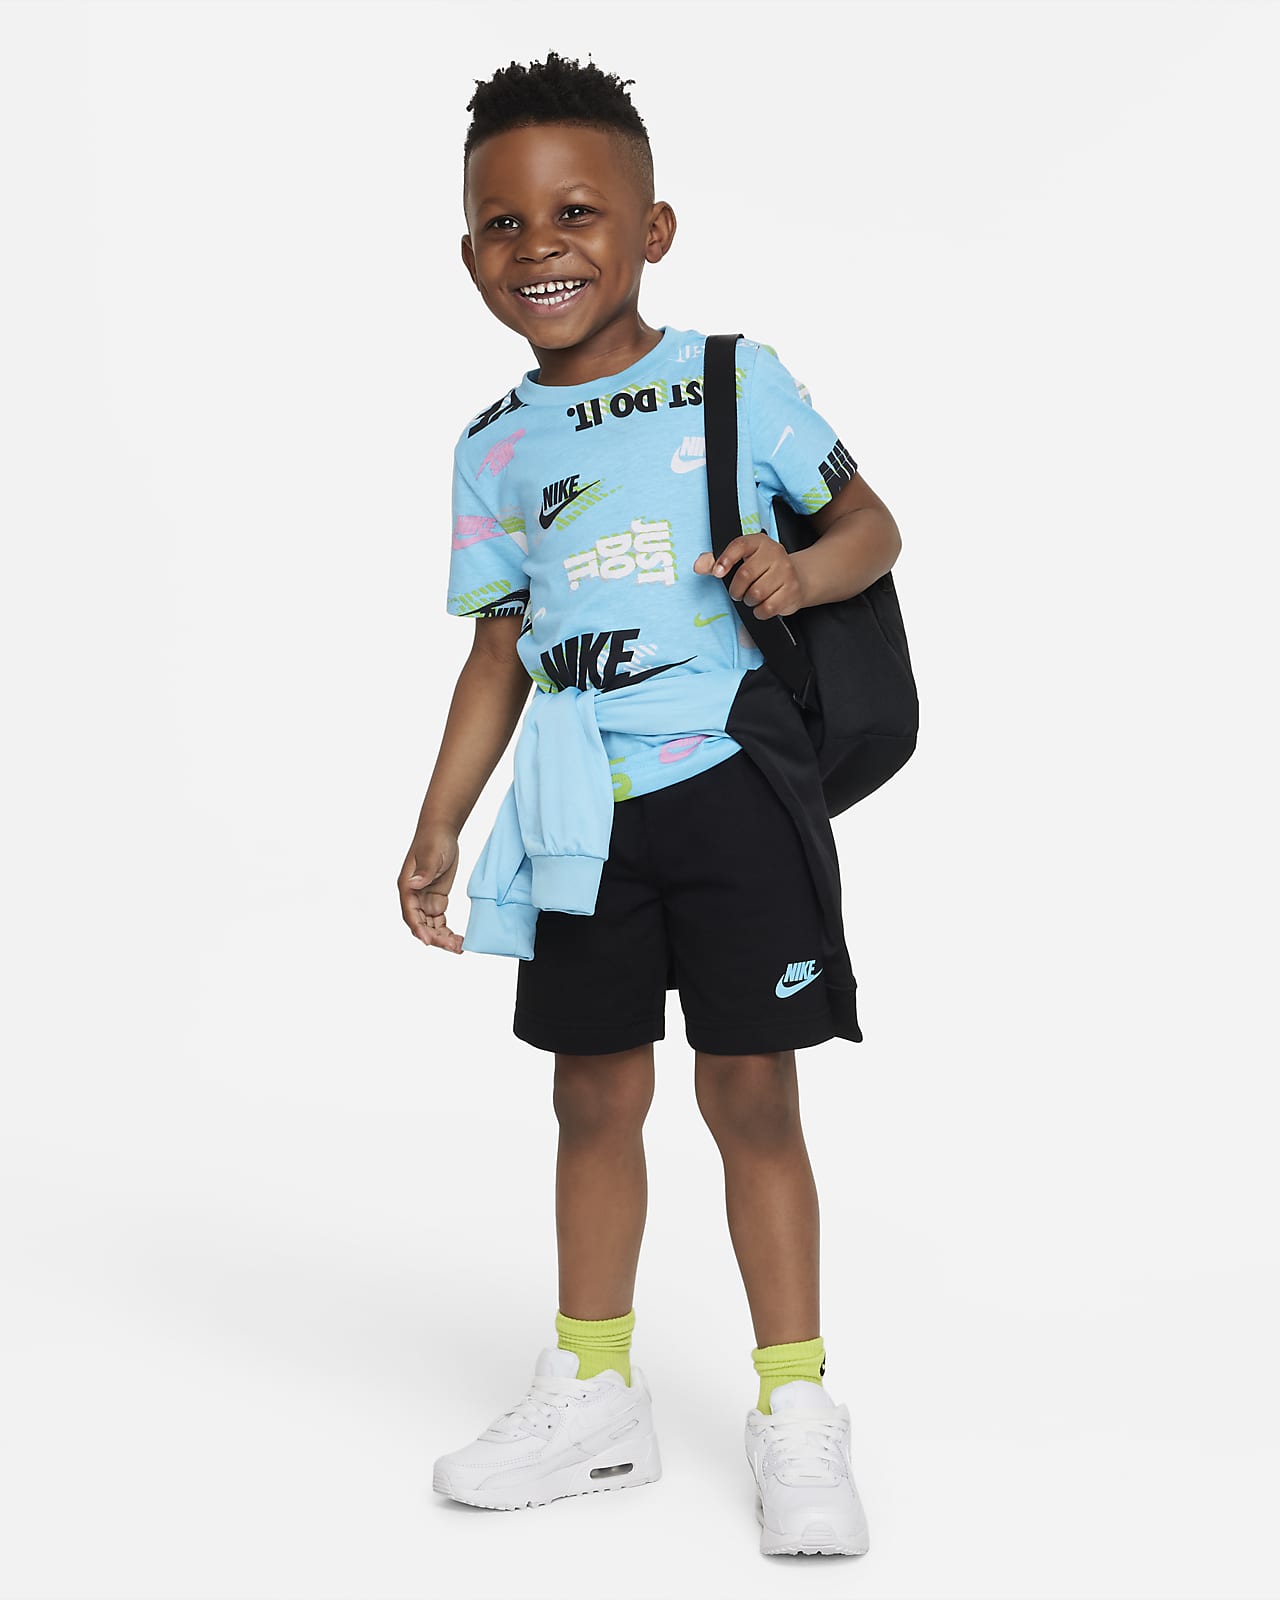 Nike Active Joy Shorts Set Toddler Set